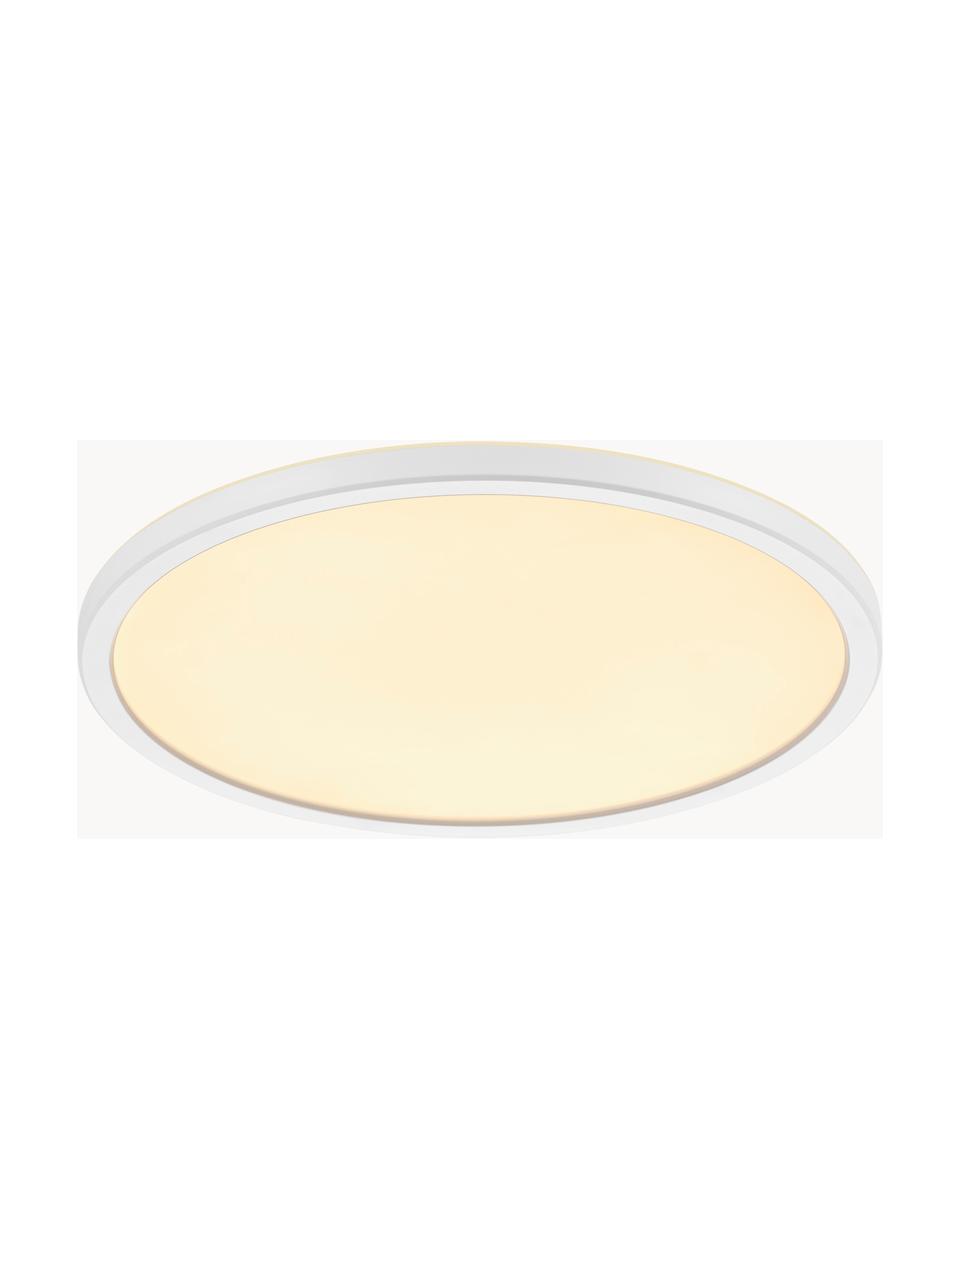 Plafón pequeño LED regulable Oja, Pantalla: plástico, Blanco, Ø 29 x Al 2 cm